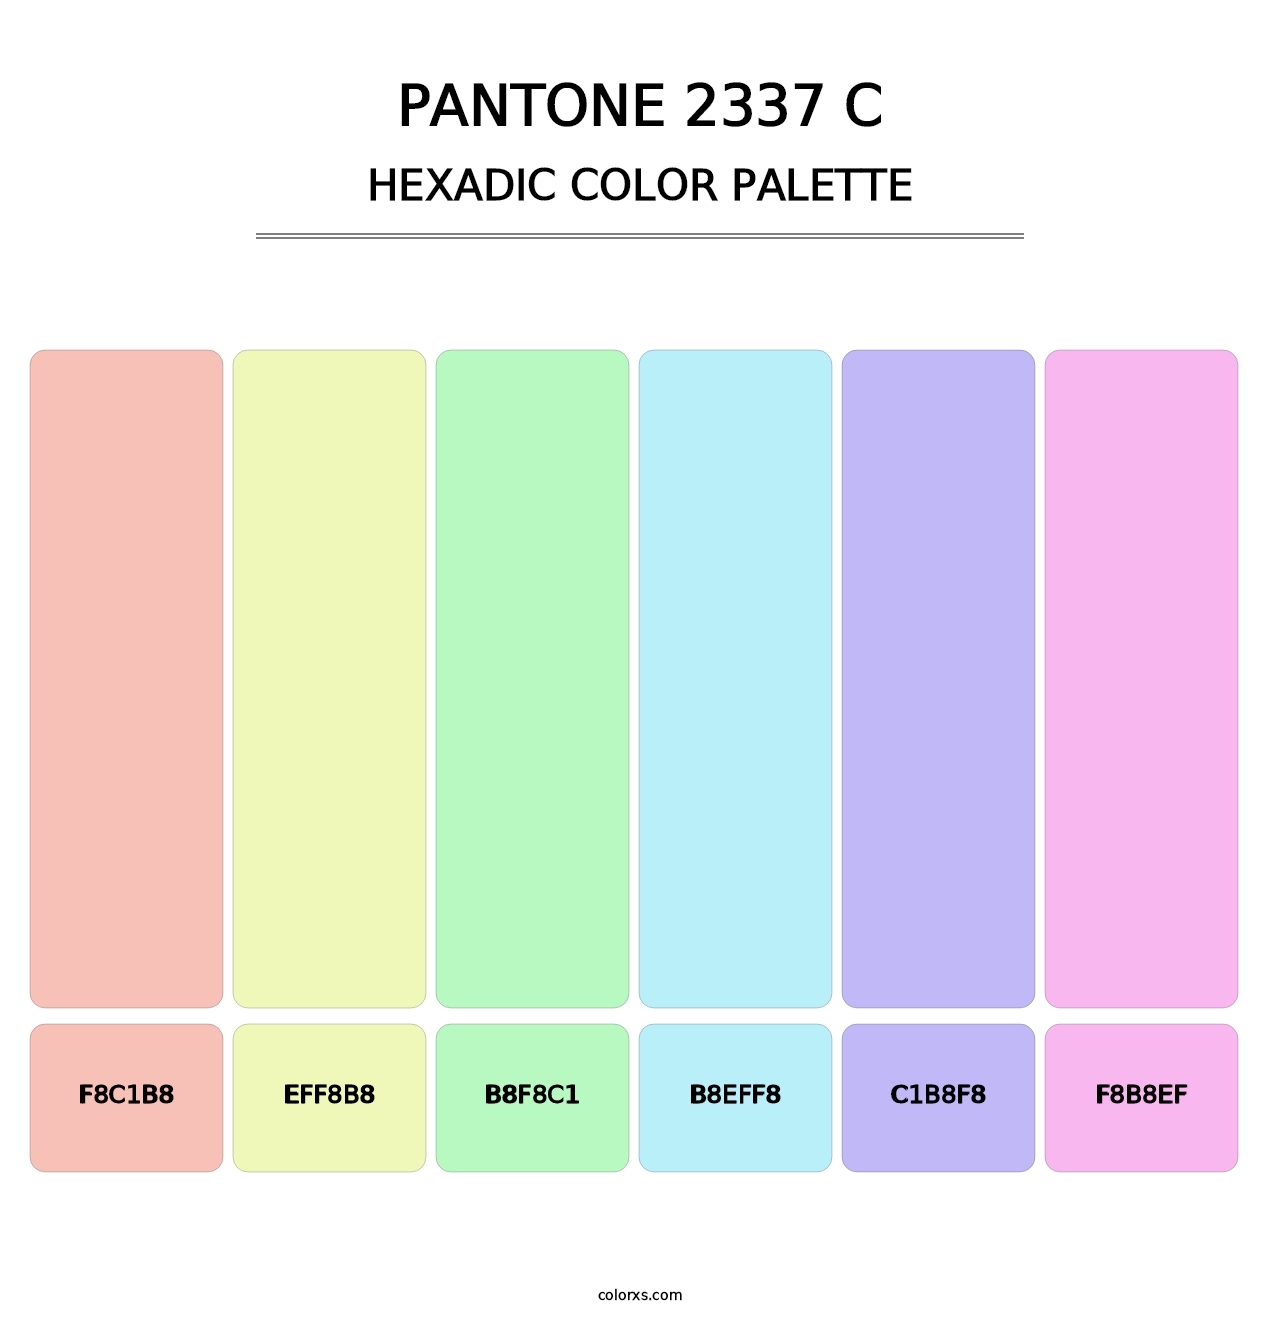 PANTONE 2337 C - Hexadic Color Palette